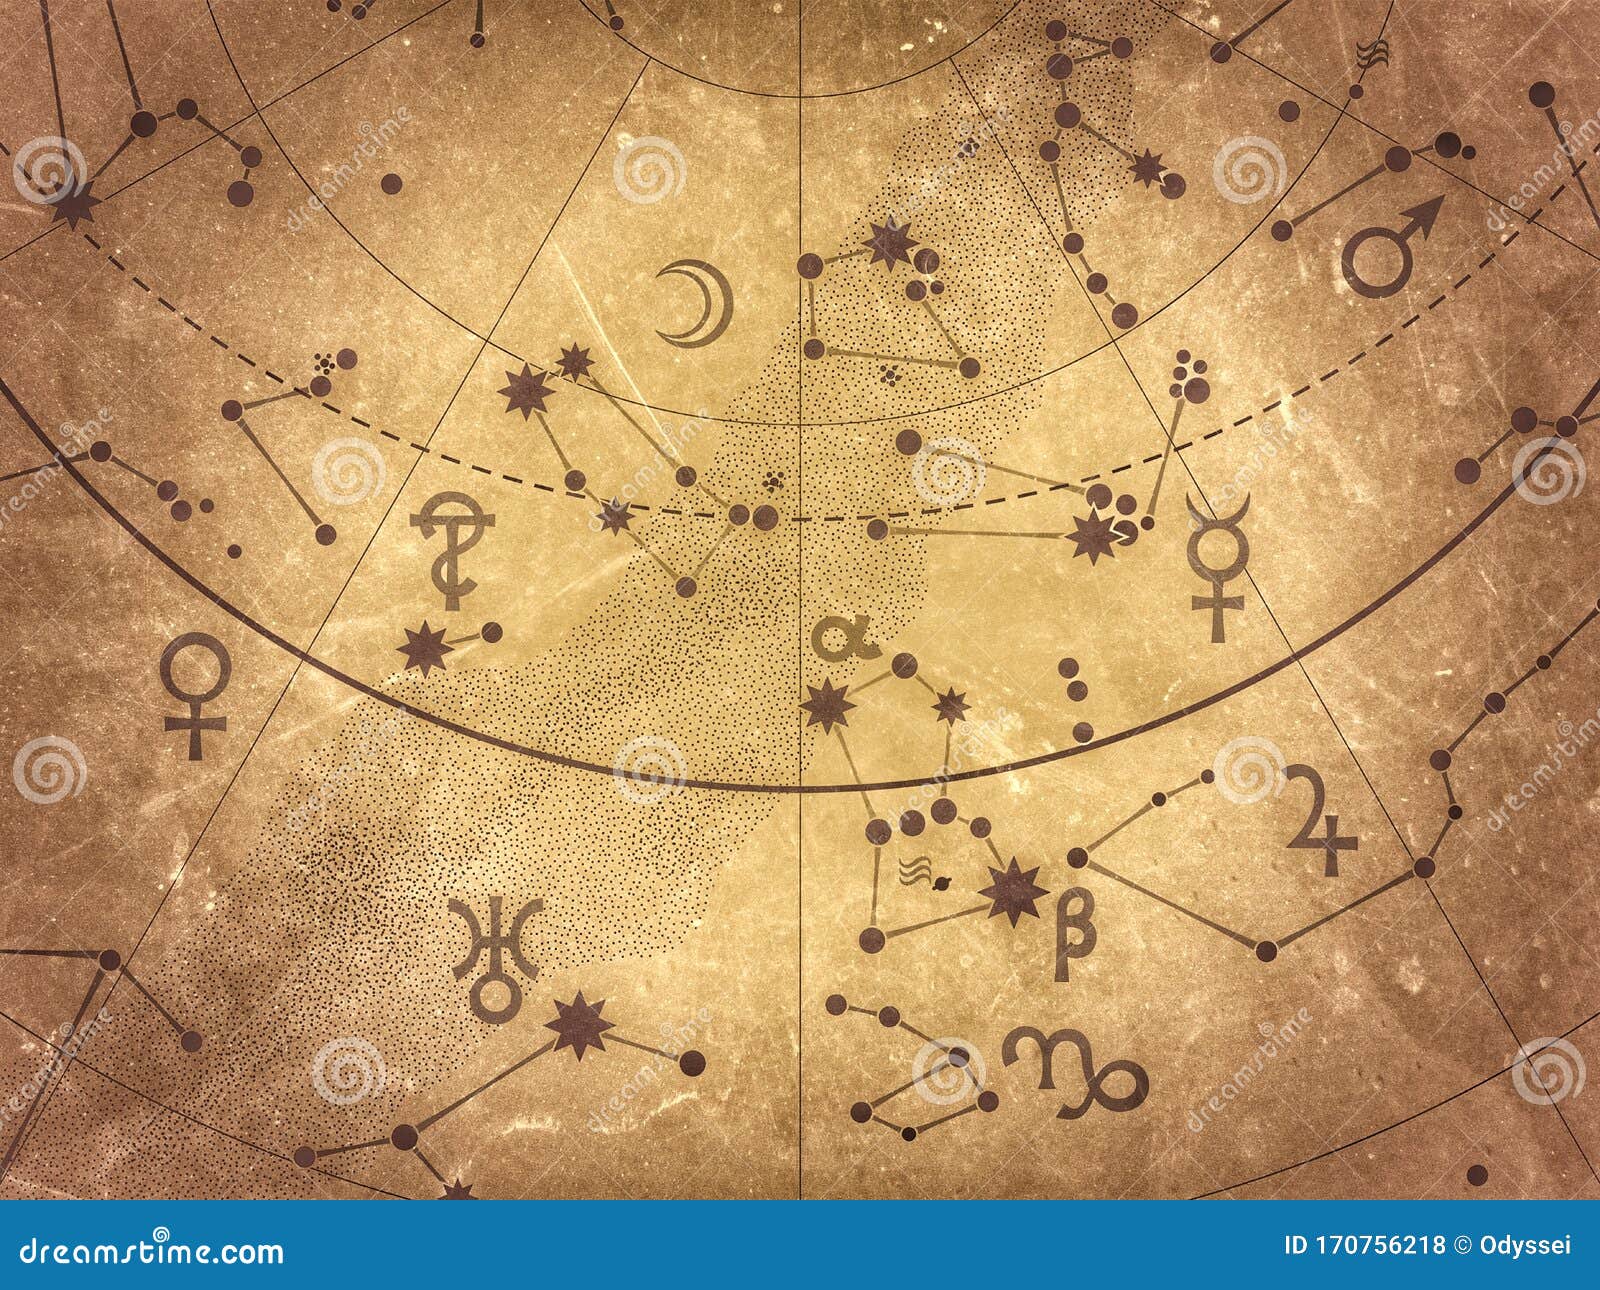 fragment of astronomical celestial atlas: stars, planets, heavens. (antique selenium: grunge vintage remake).